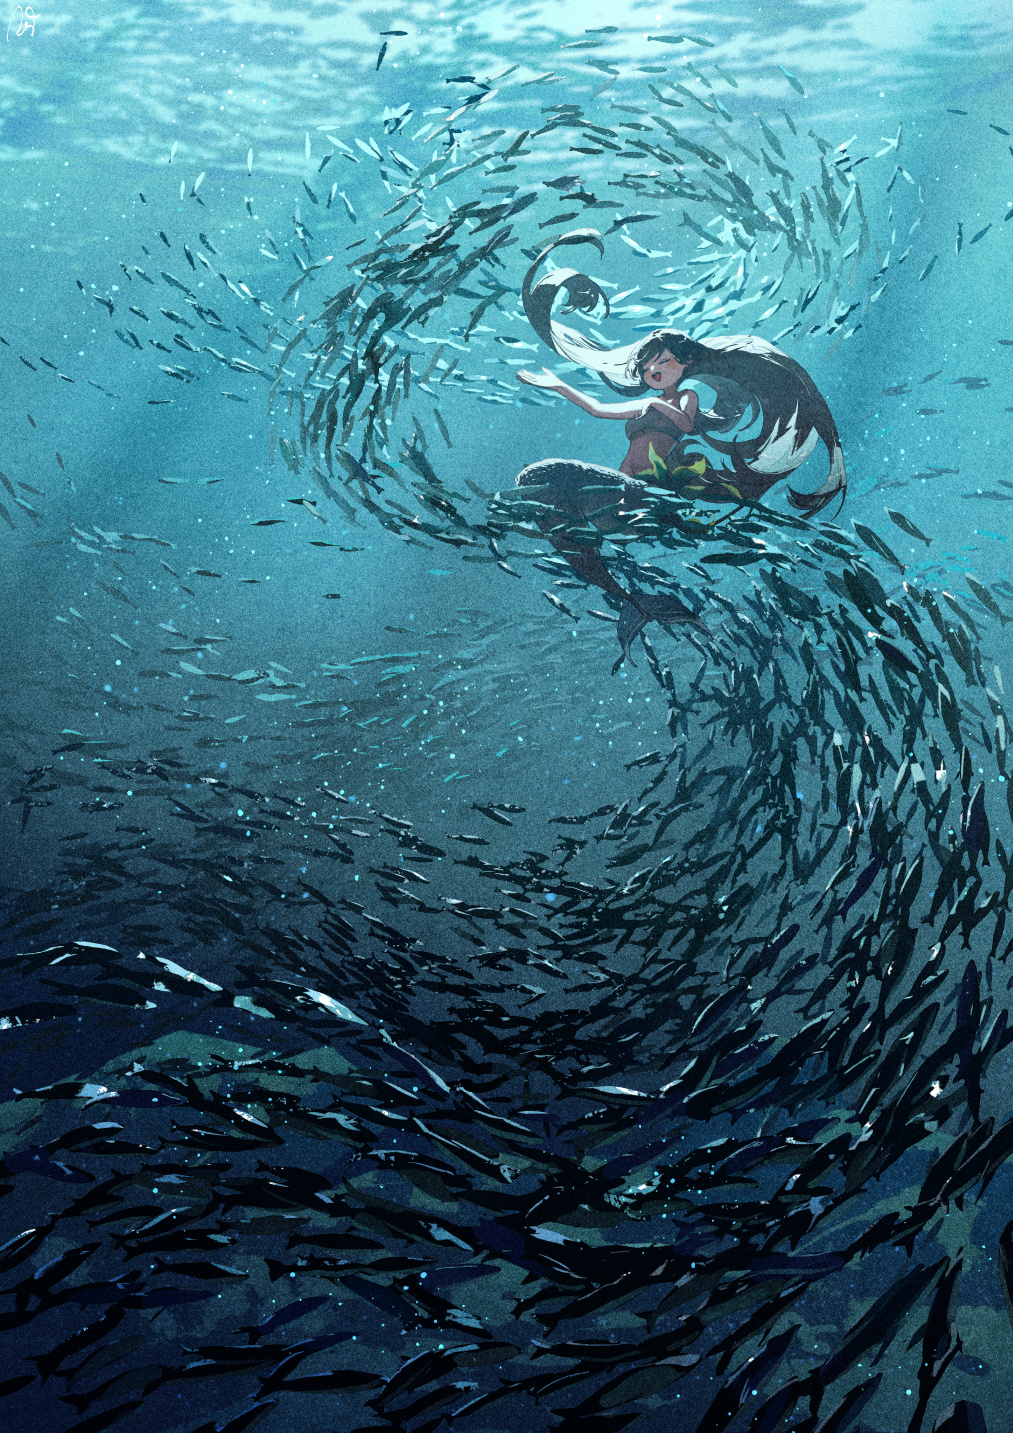 Anime 1013x1433 Potg anime girls illustration artwork portrait display sea fish mermaids underwater blue singing in water water